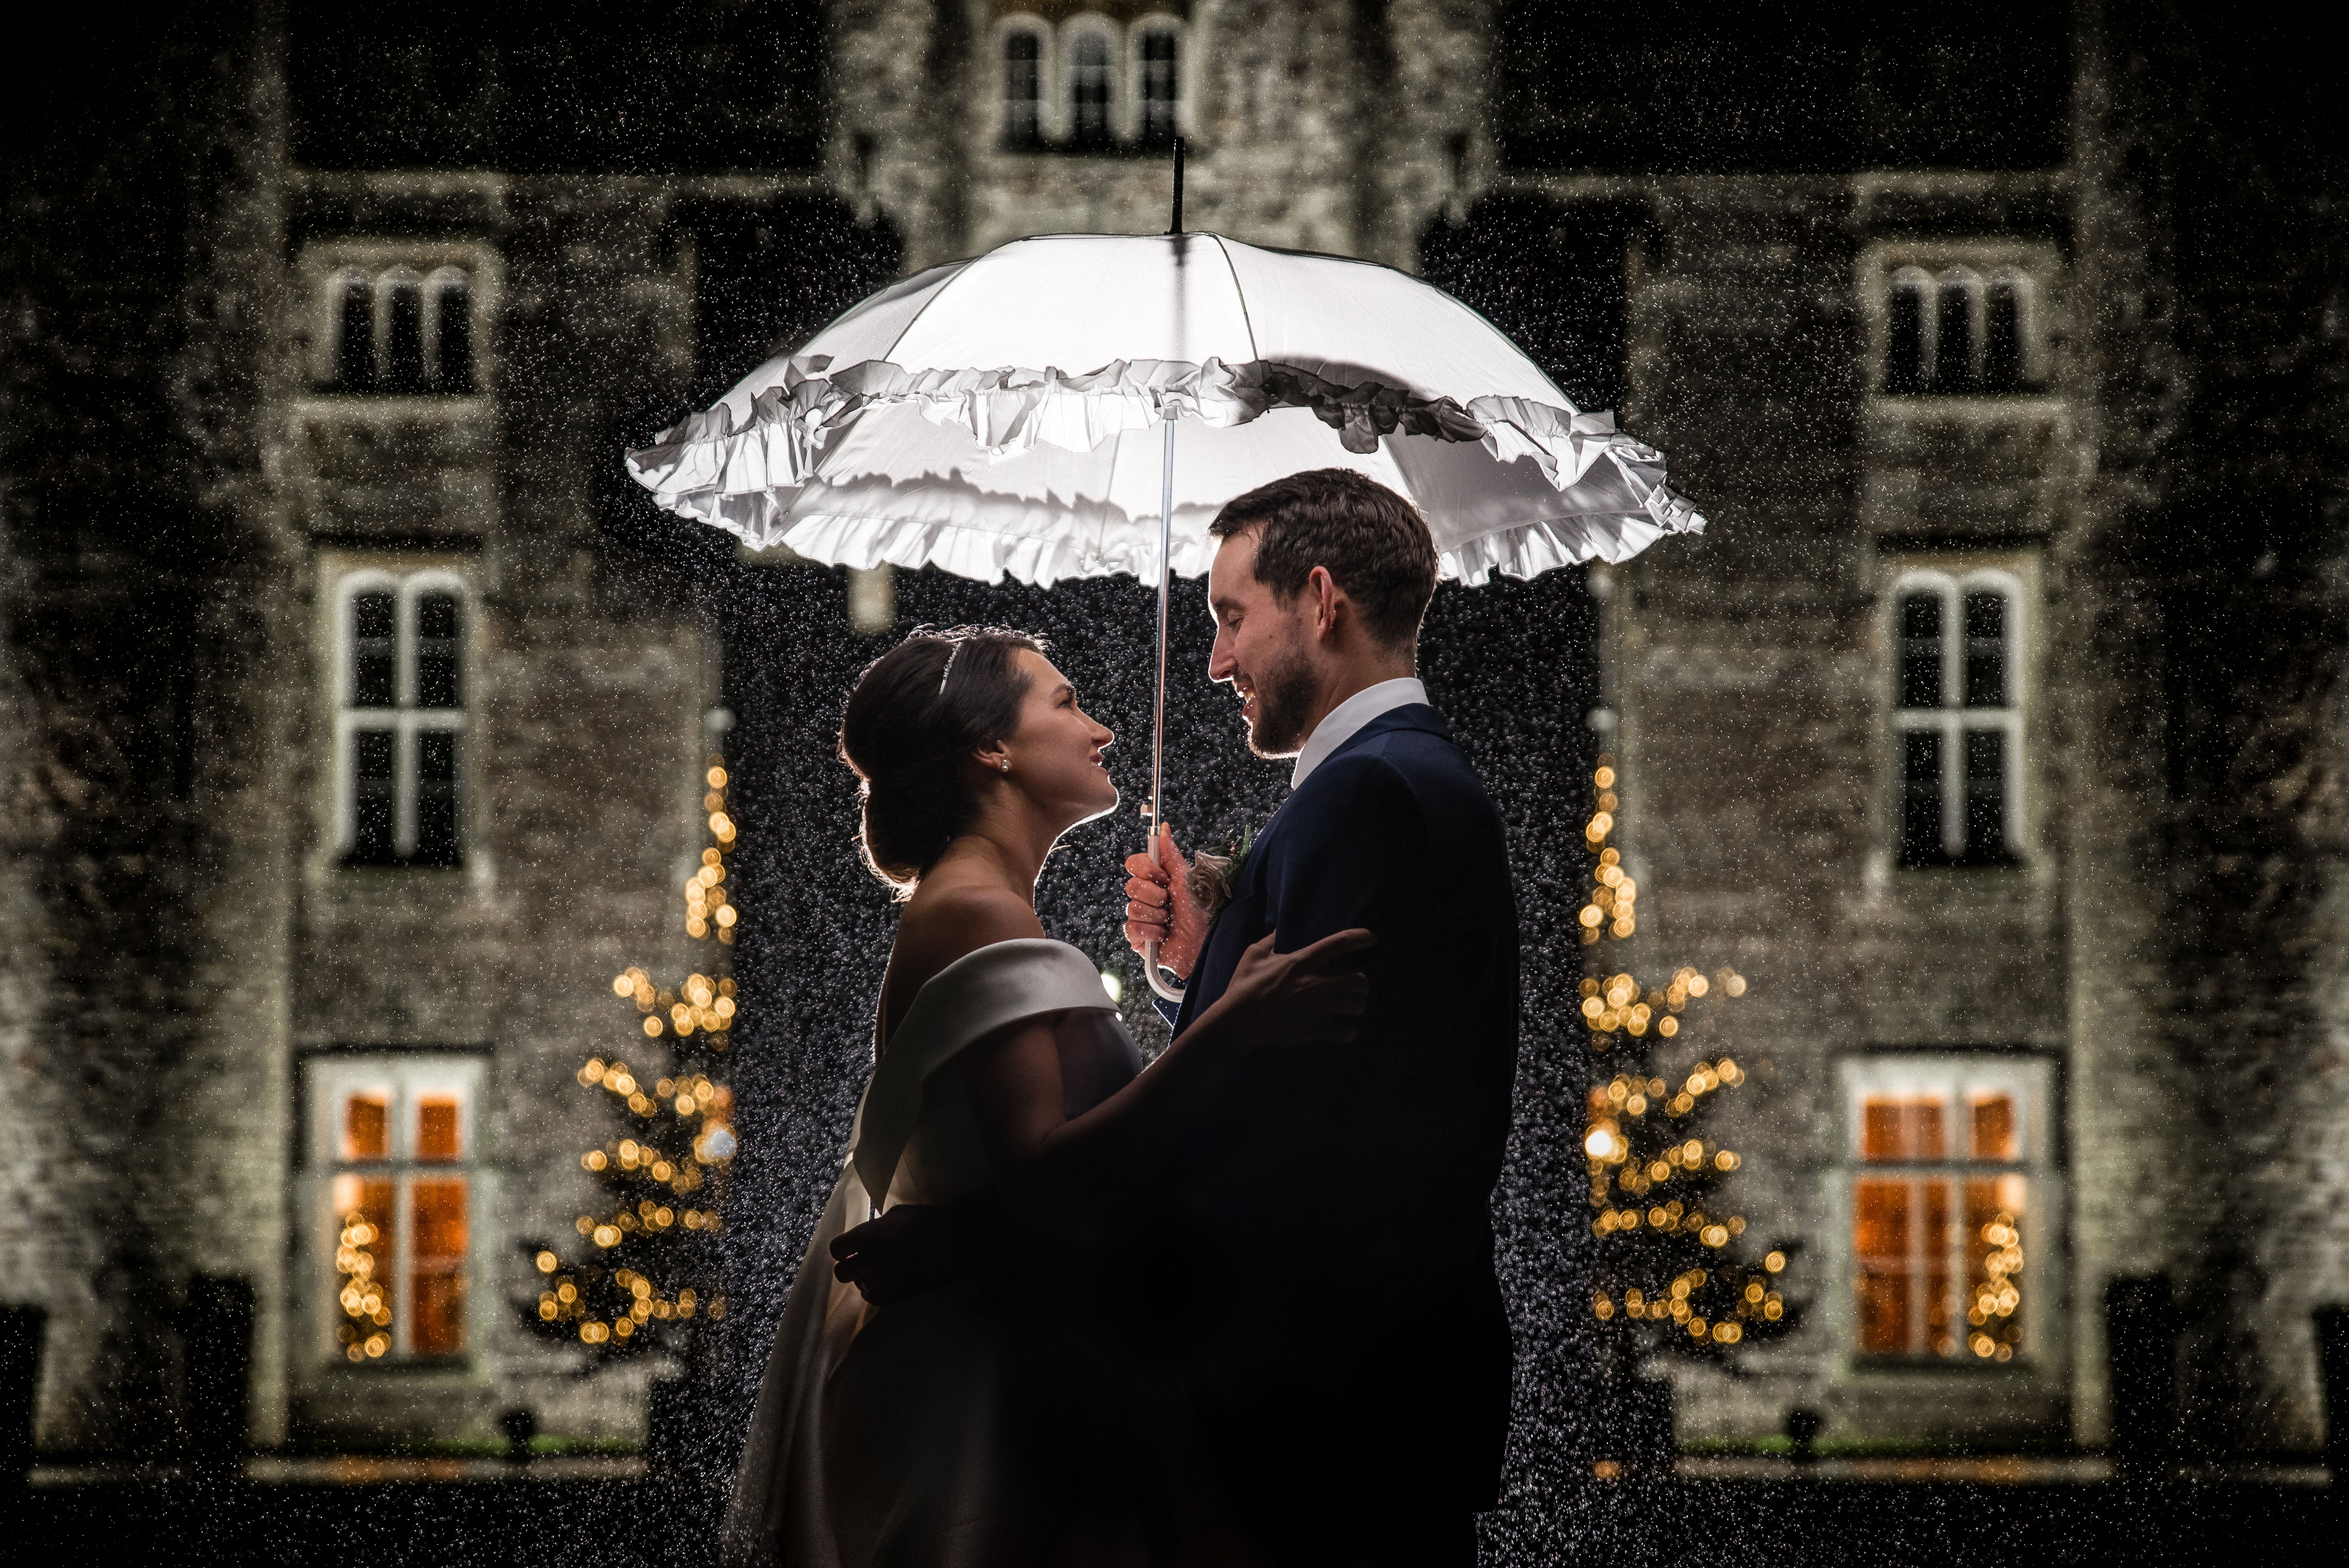 Hensol Castle winter wedding in the rain